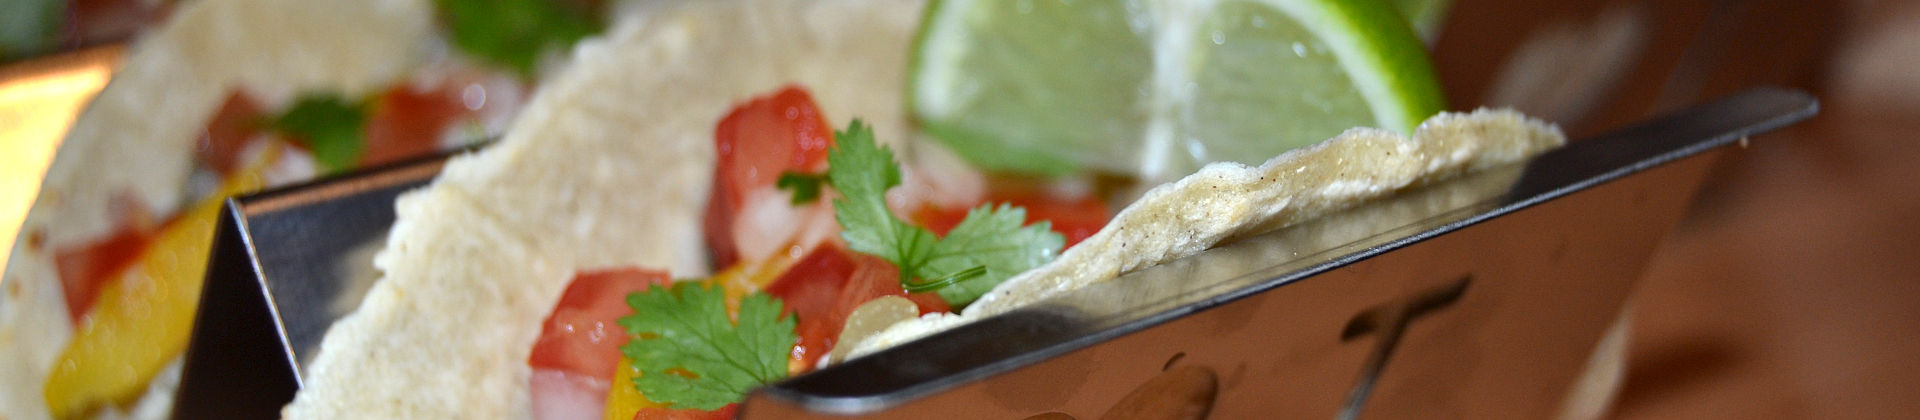 Tortillas und mexikanische Lebensmittel online | Catering | Nantli.de